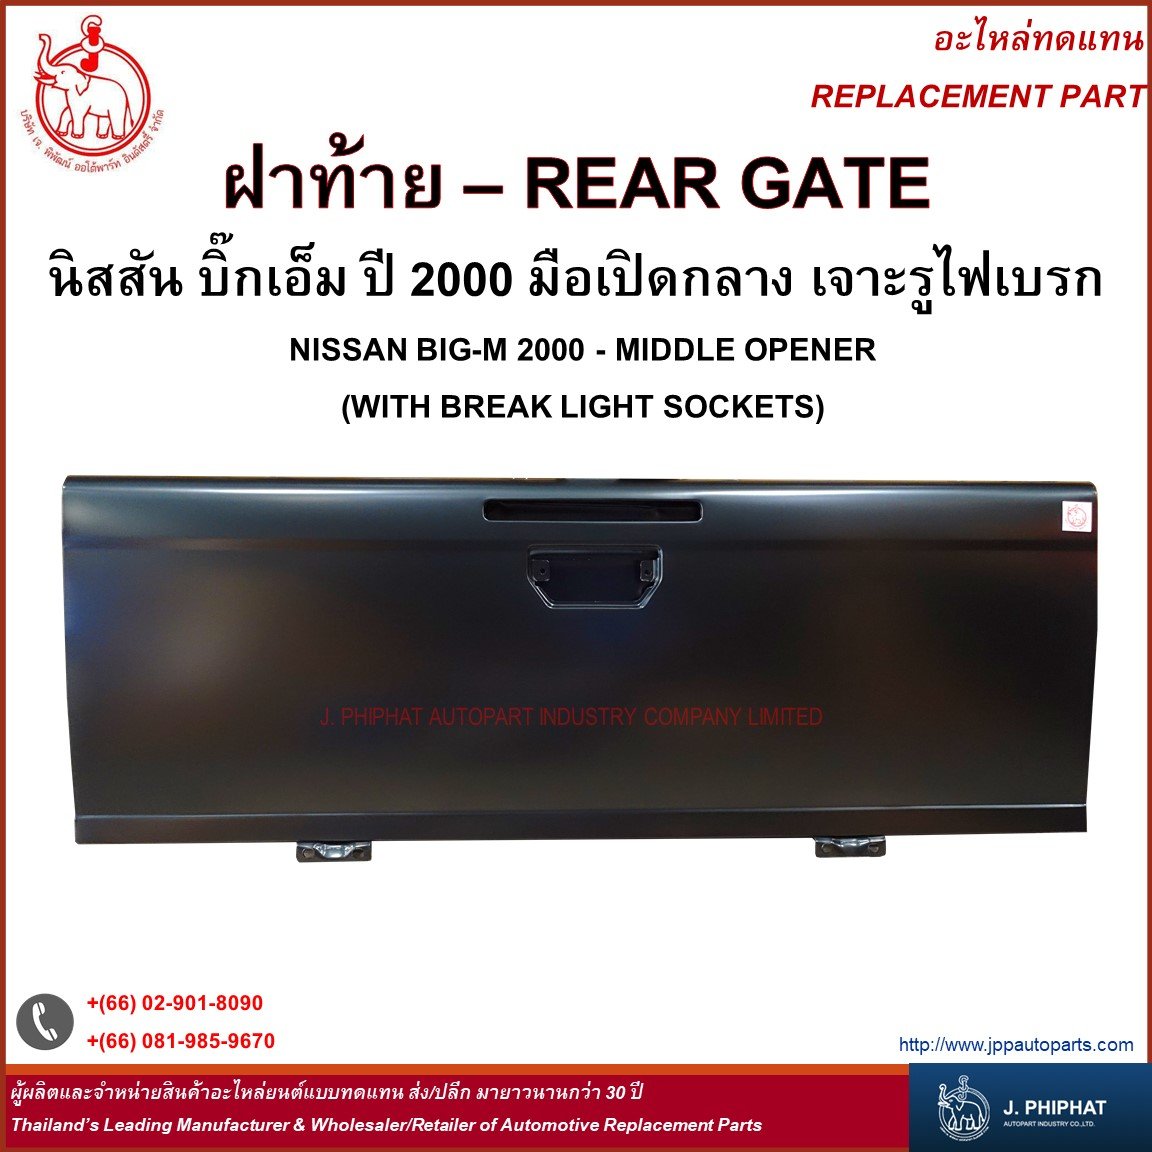 Rear Gate - Nissan BIG - M  2000 Middle opener/With Break light sockets